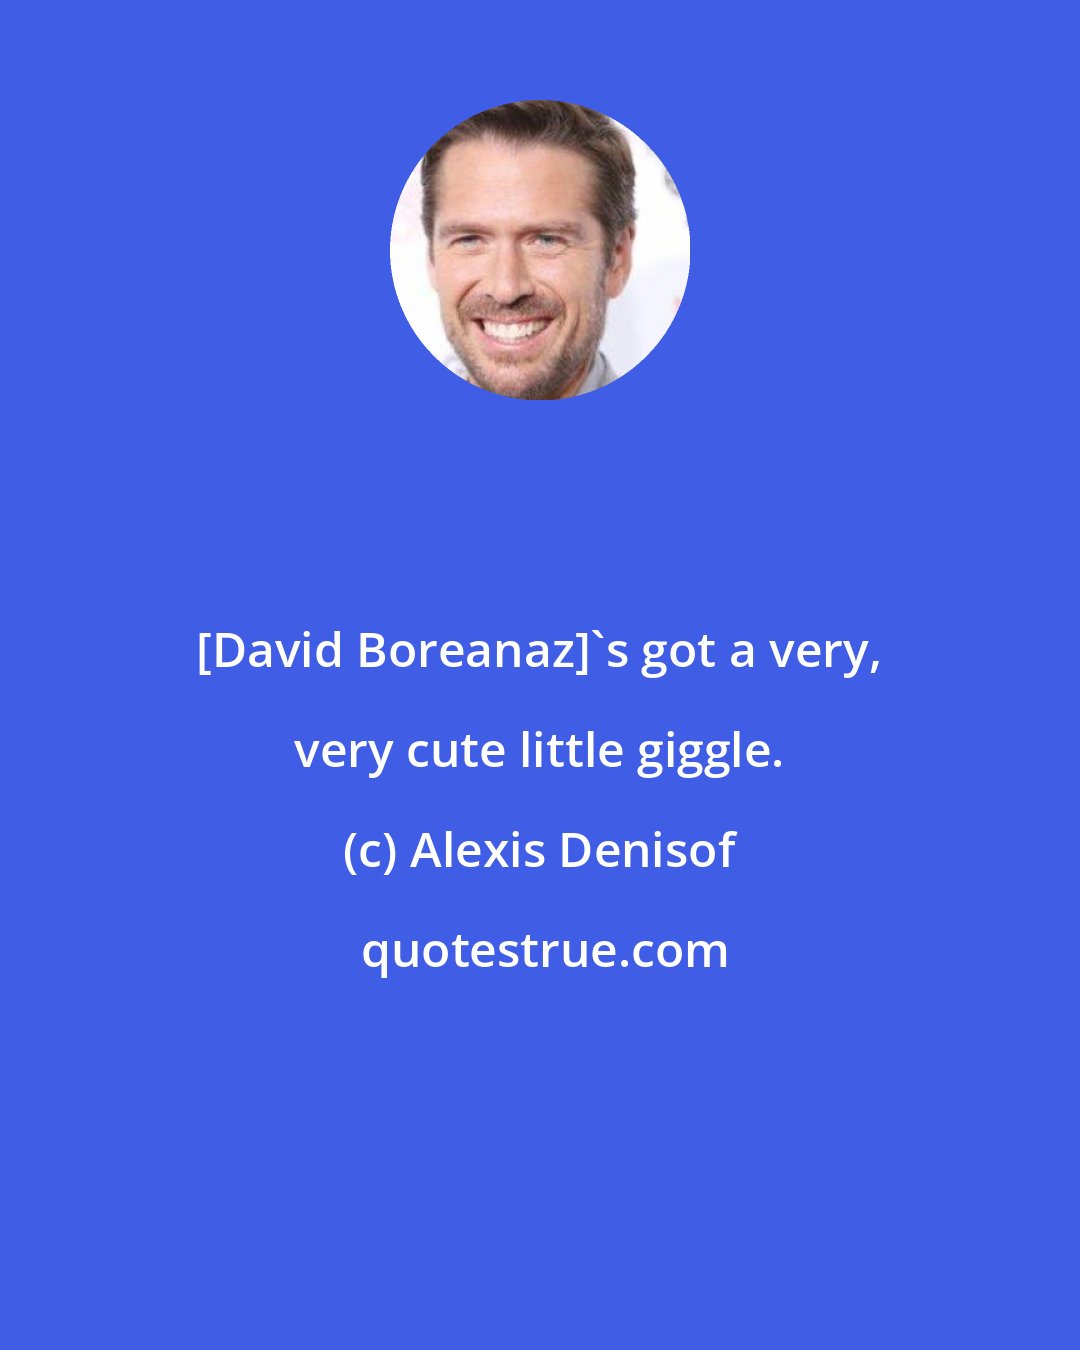 Alexis Denisof: [David Boreanaz]'s got a very, very cute little giggle.